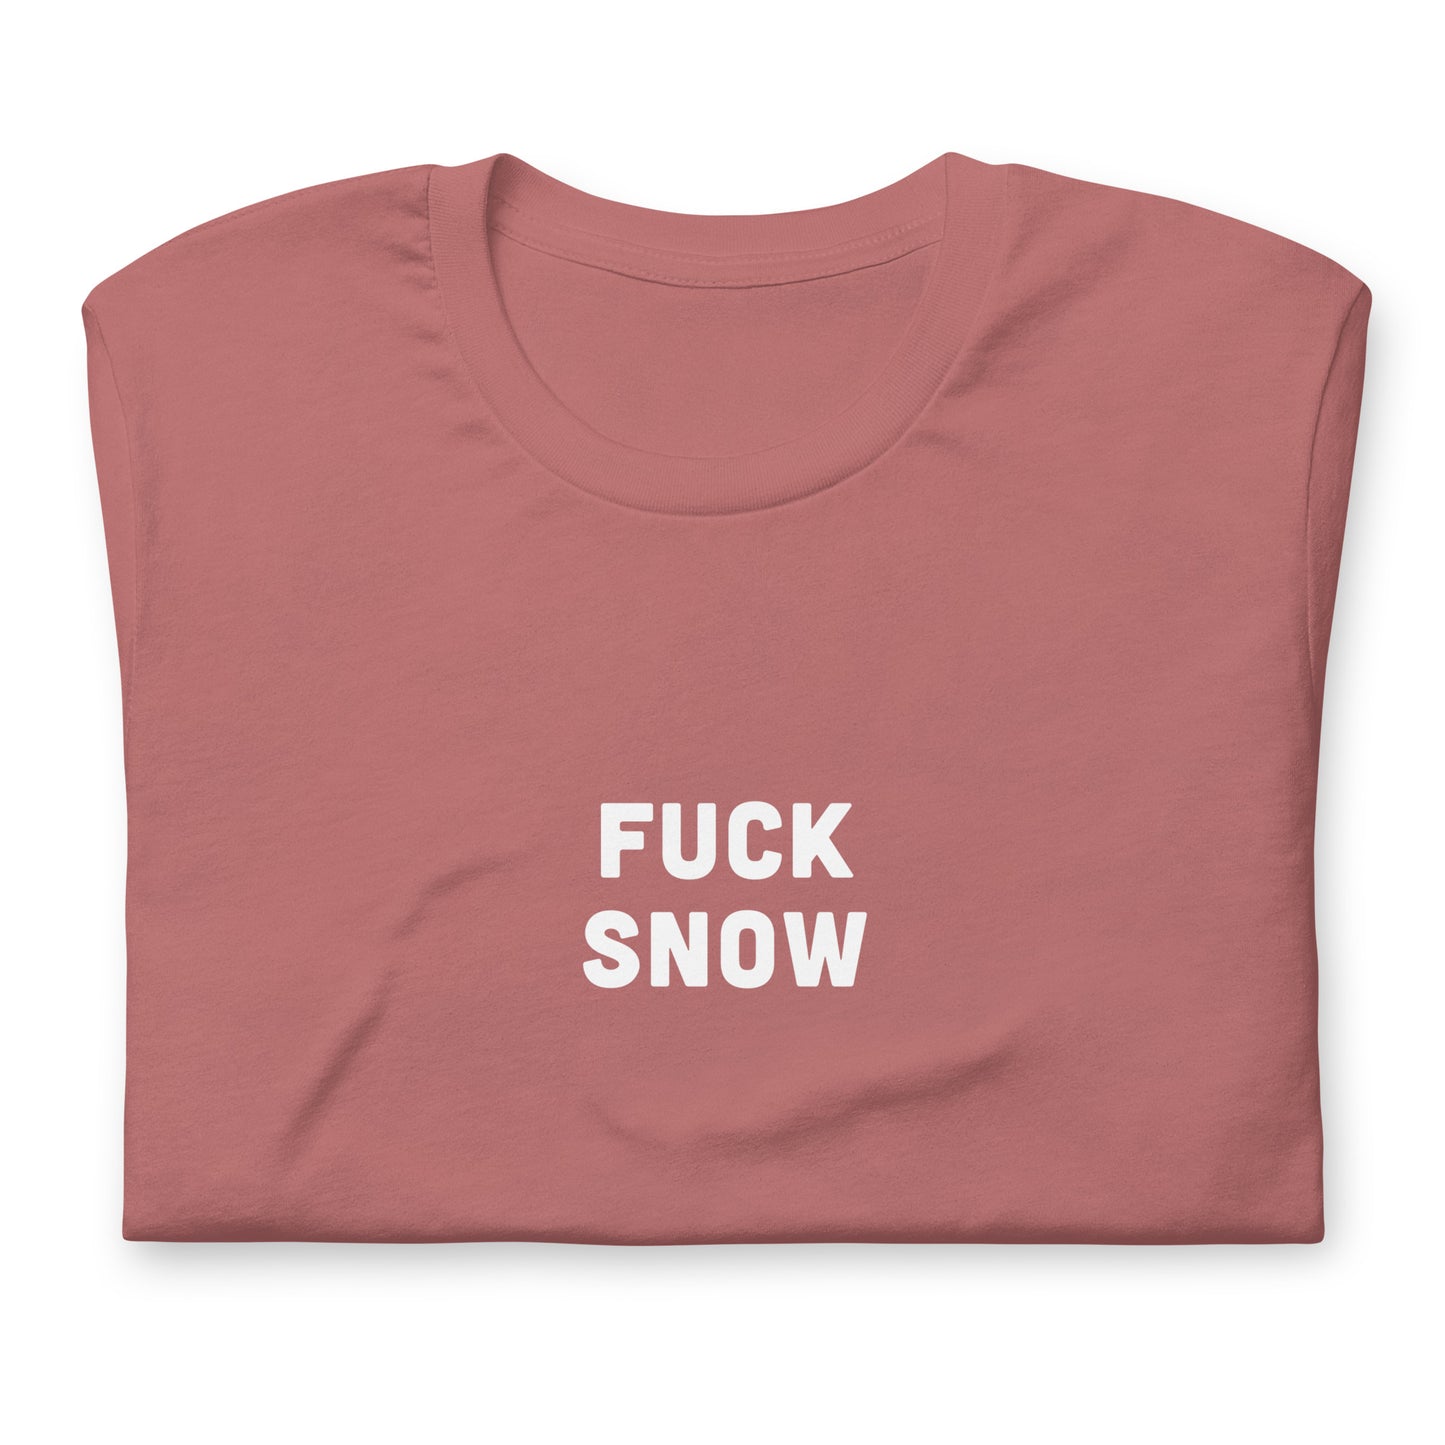 Fuck Snow T-Shirt Size 2XL Color Navy